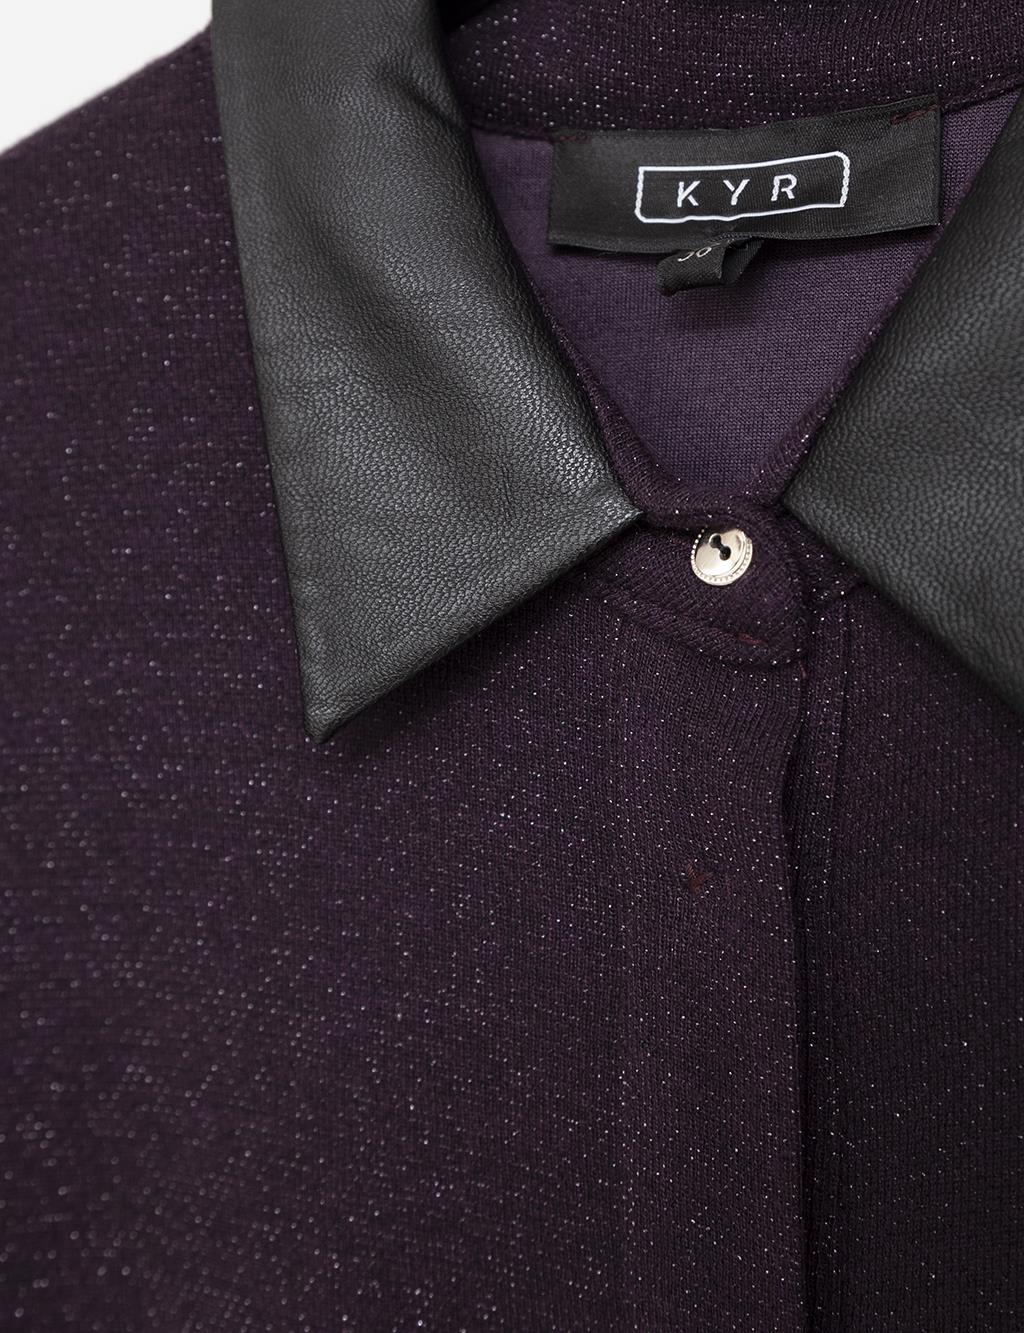 KYR Collar and Cuff Detailed Full Length Dress Plum